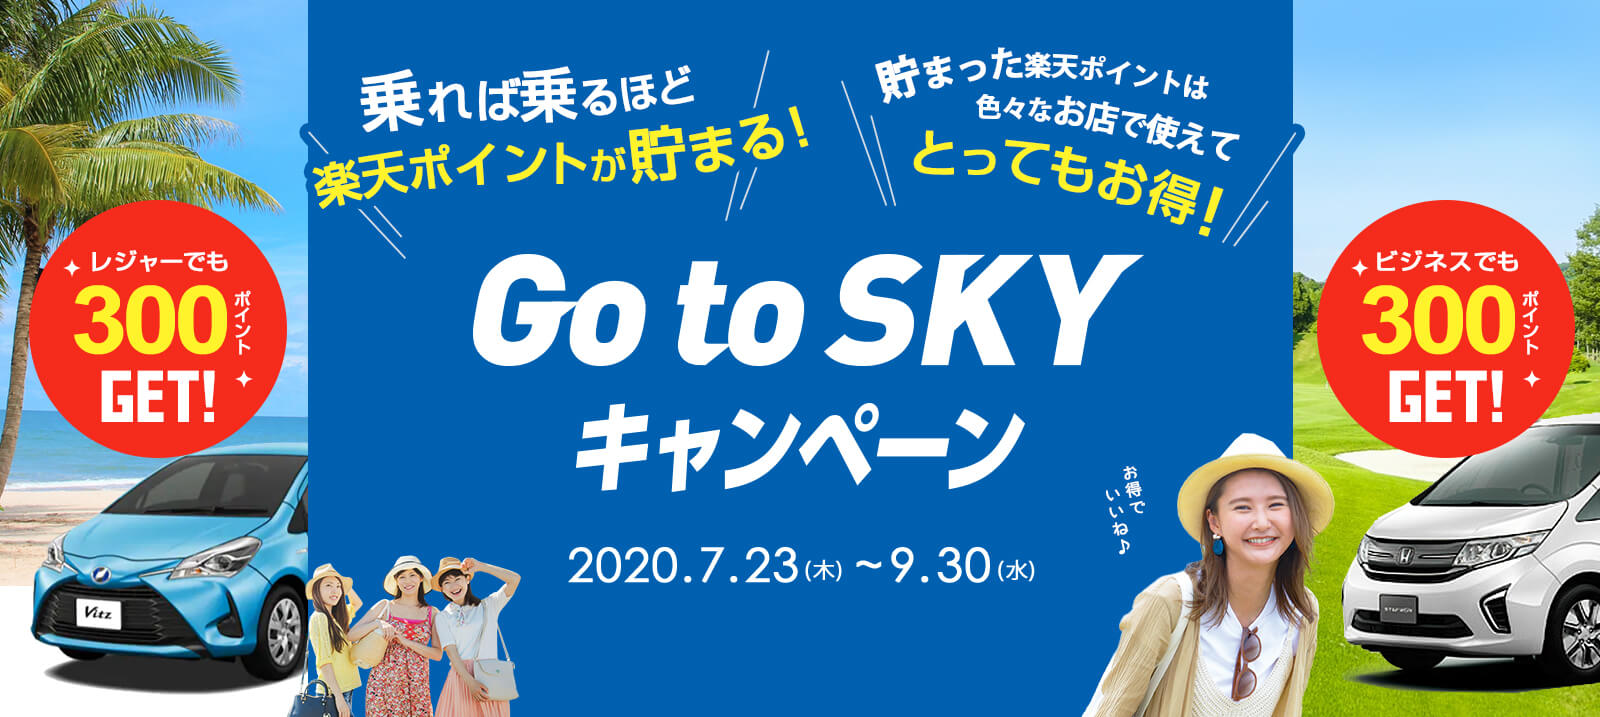 GO to SKY キャンペーン